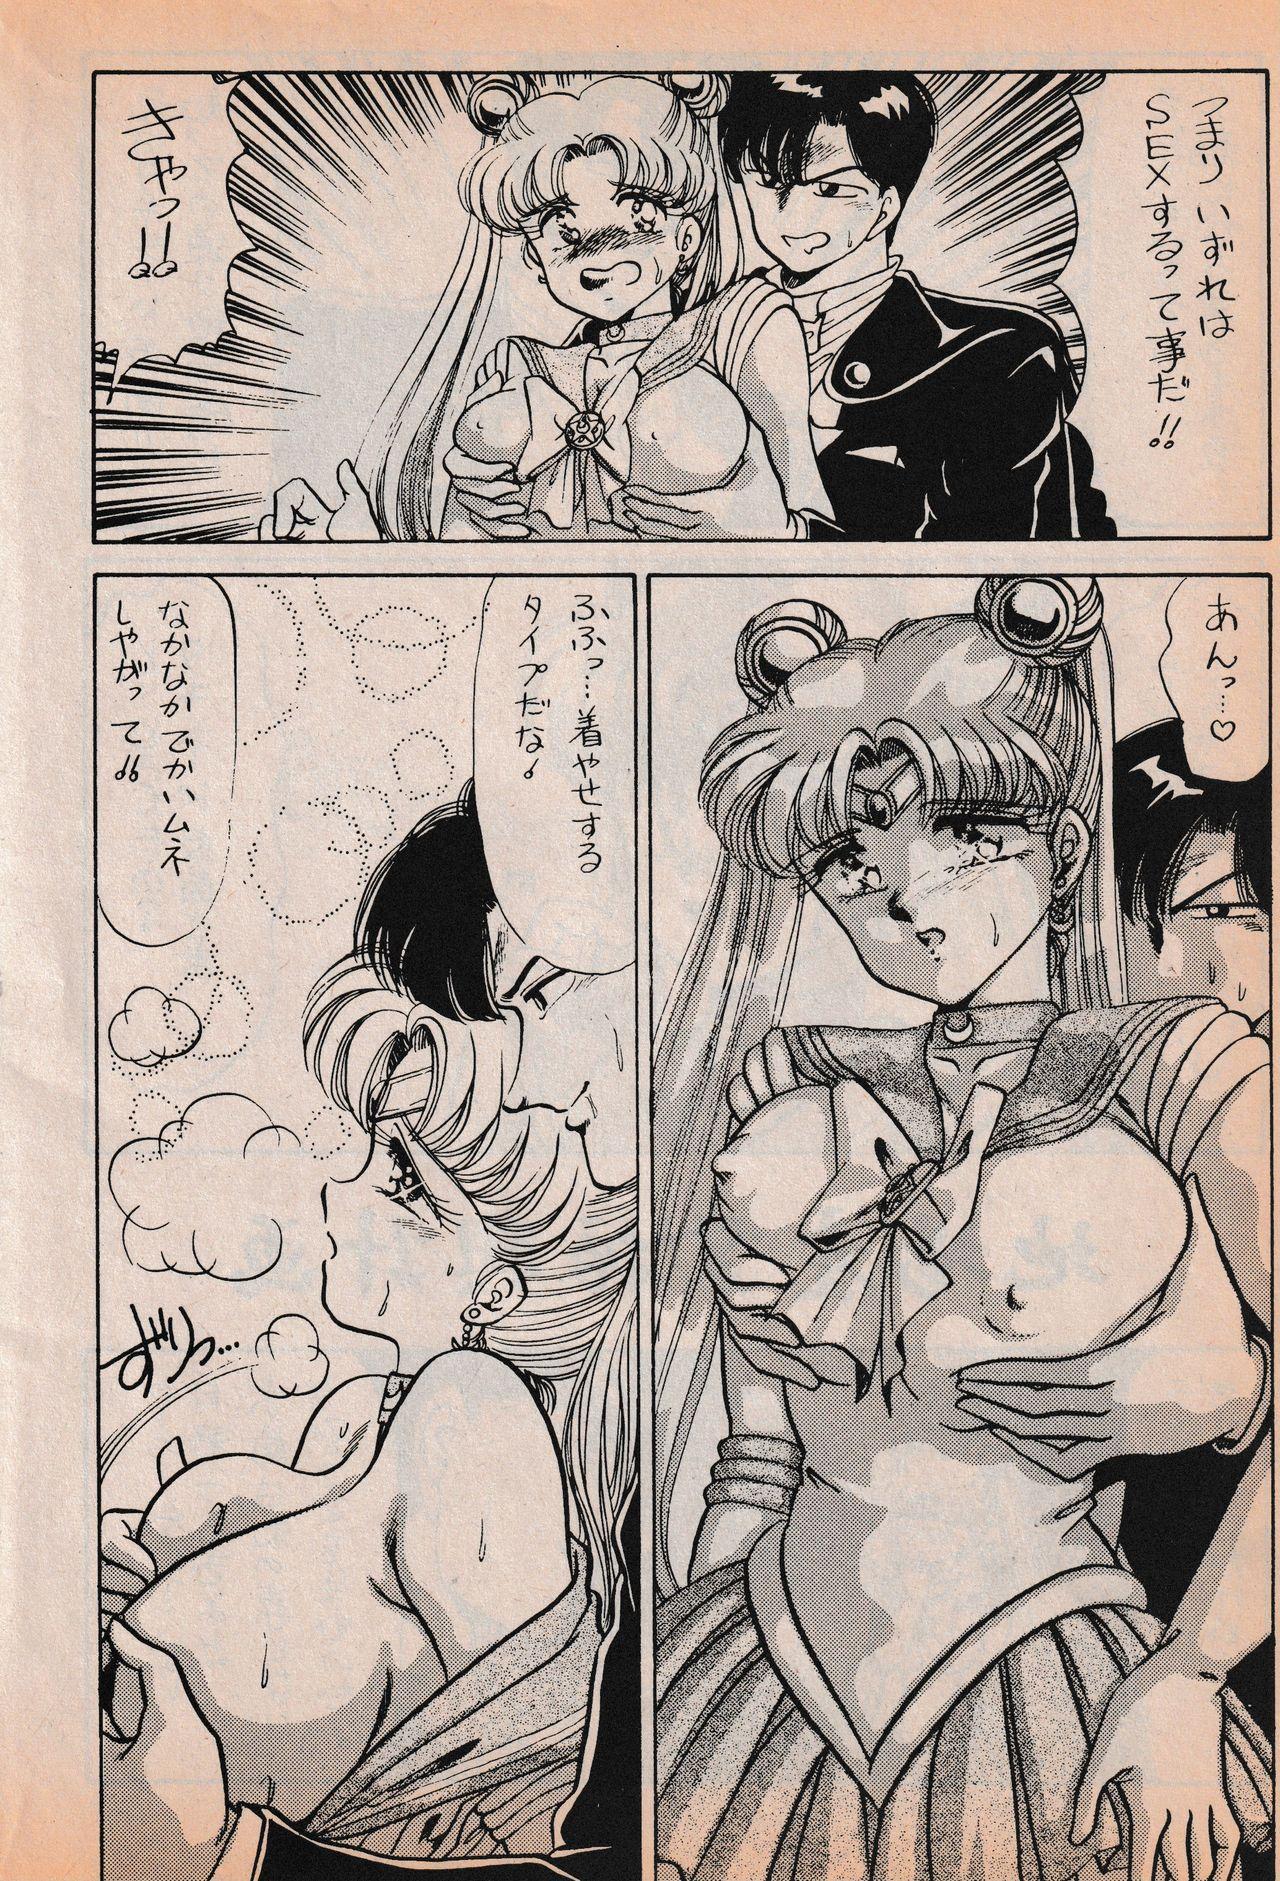 Fuck Com Sailor X vol. 7 - The Kama Sutra Of Pain - Sailor moon Tenchi muyo G gundam Blowjob - Picture 3